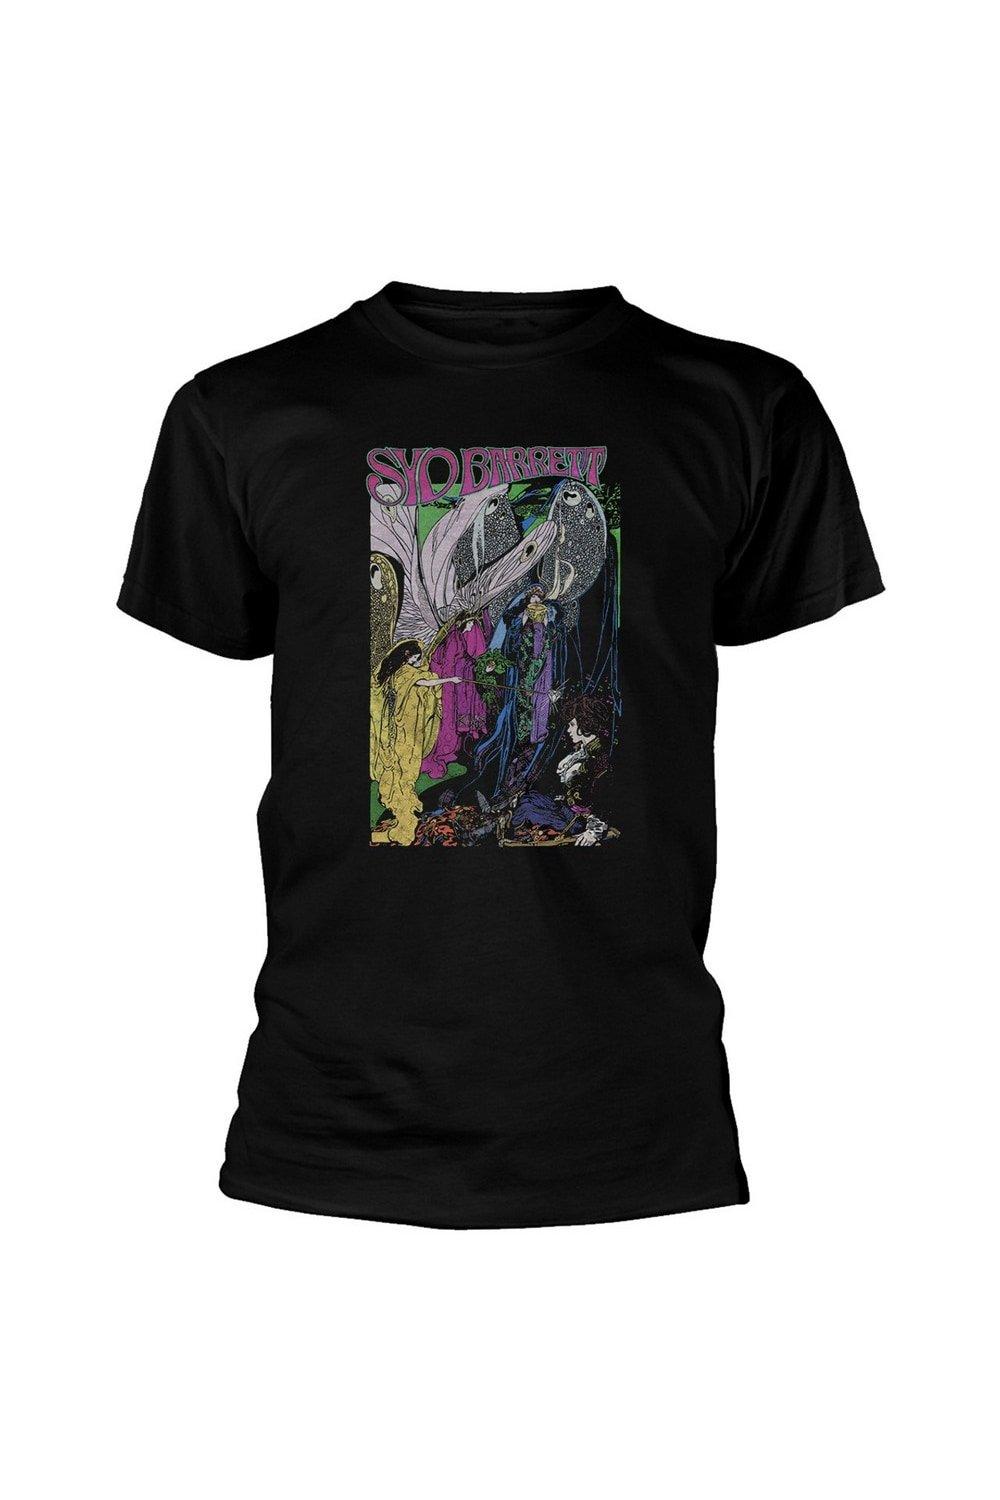 Хлопковая футболка «Феи» Syd Barrett, черный syd barrett syd barrett an introduction to syd barrett 2 lp